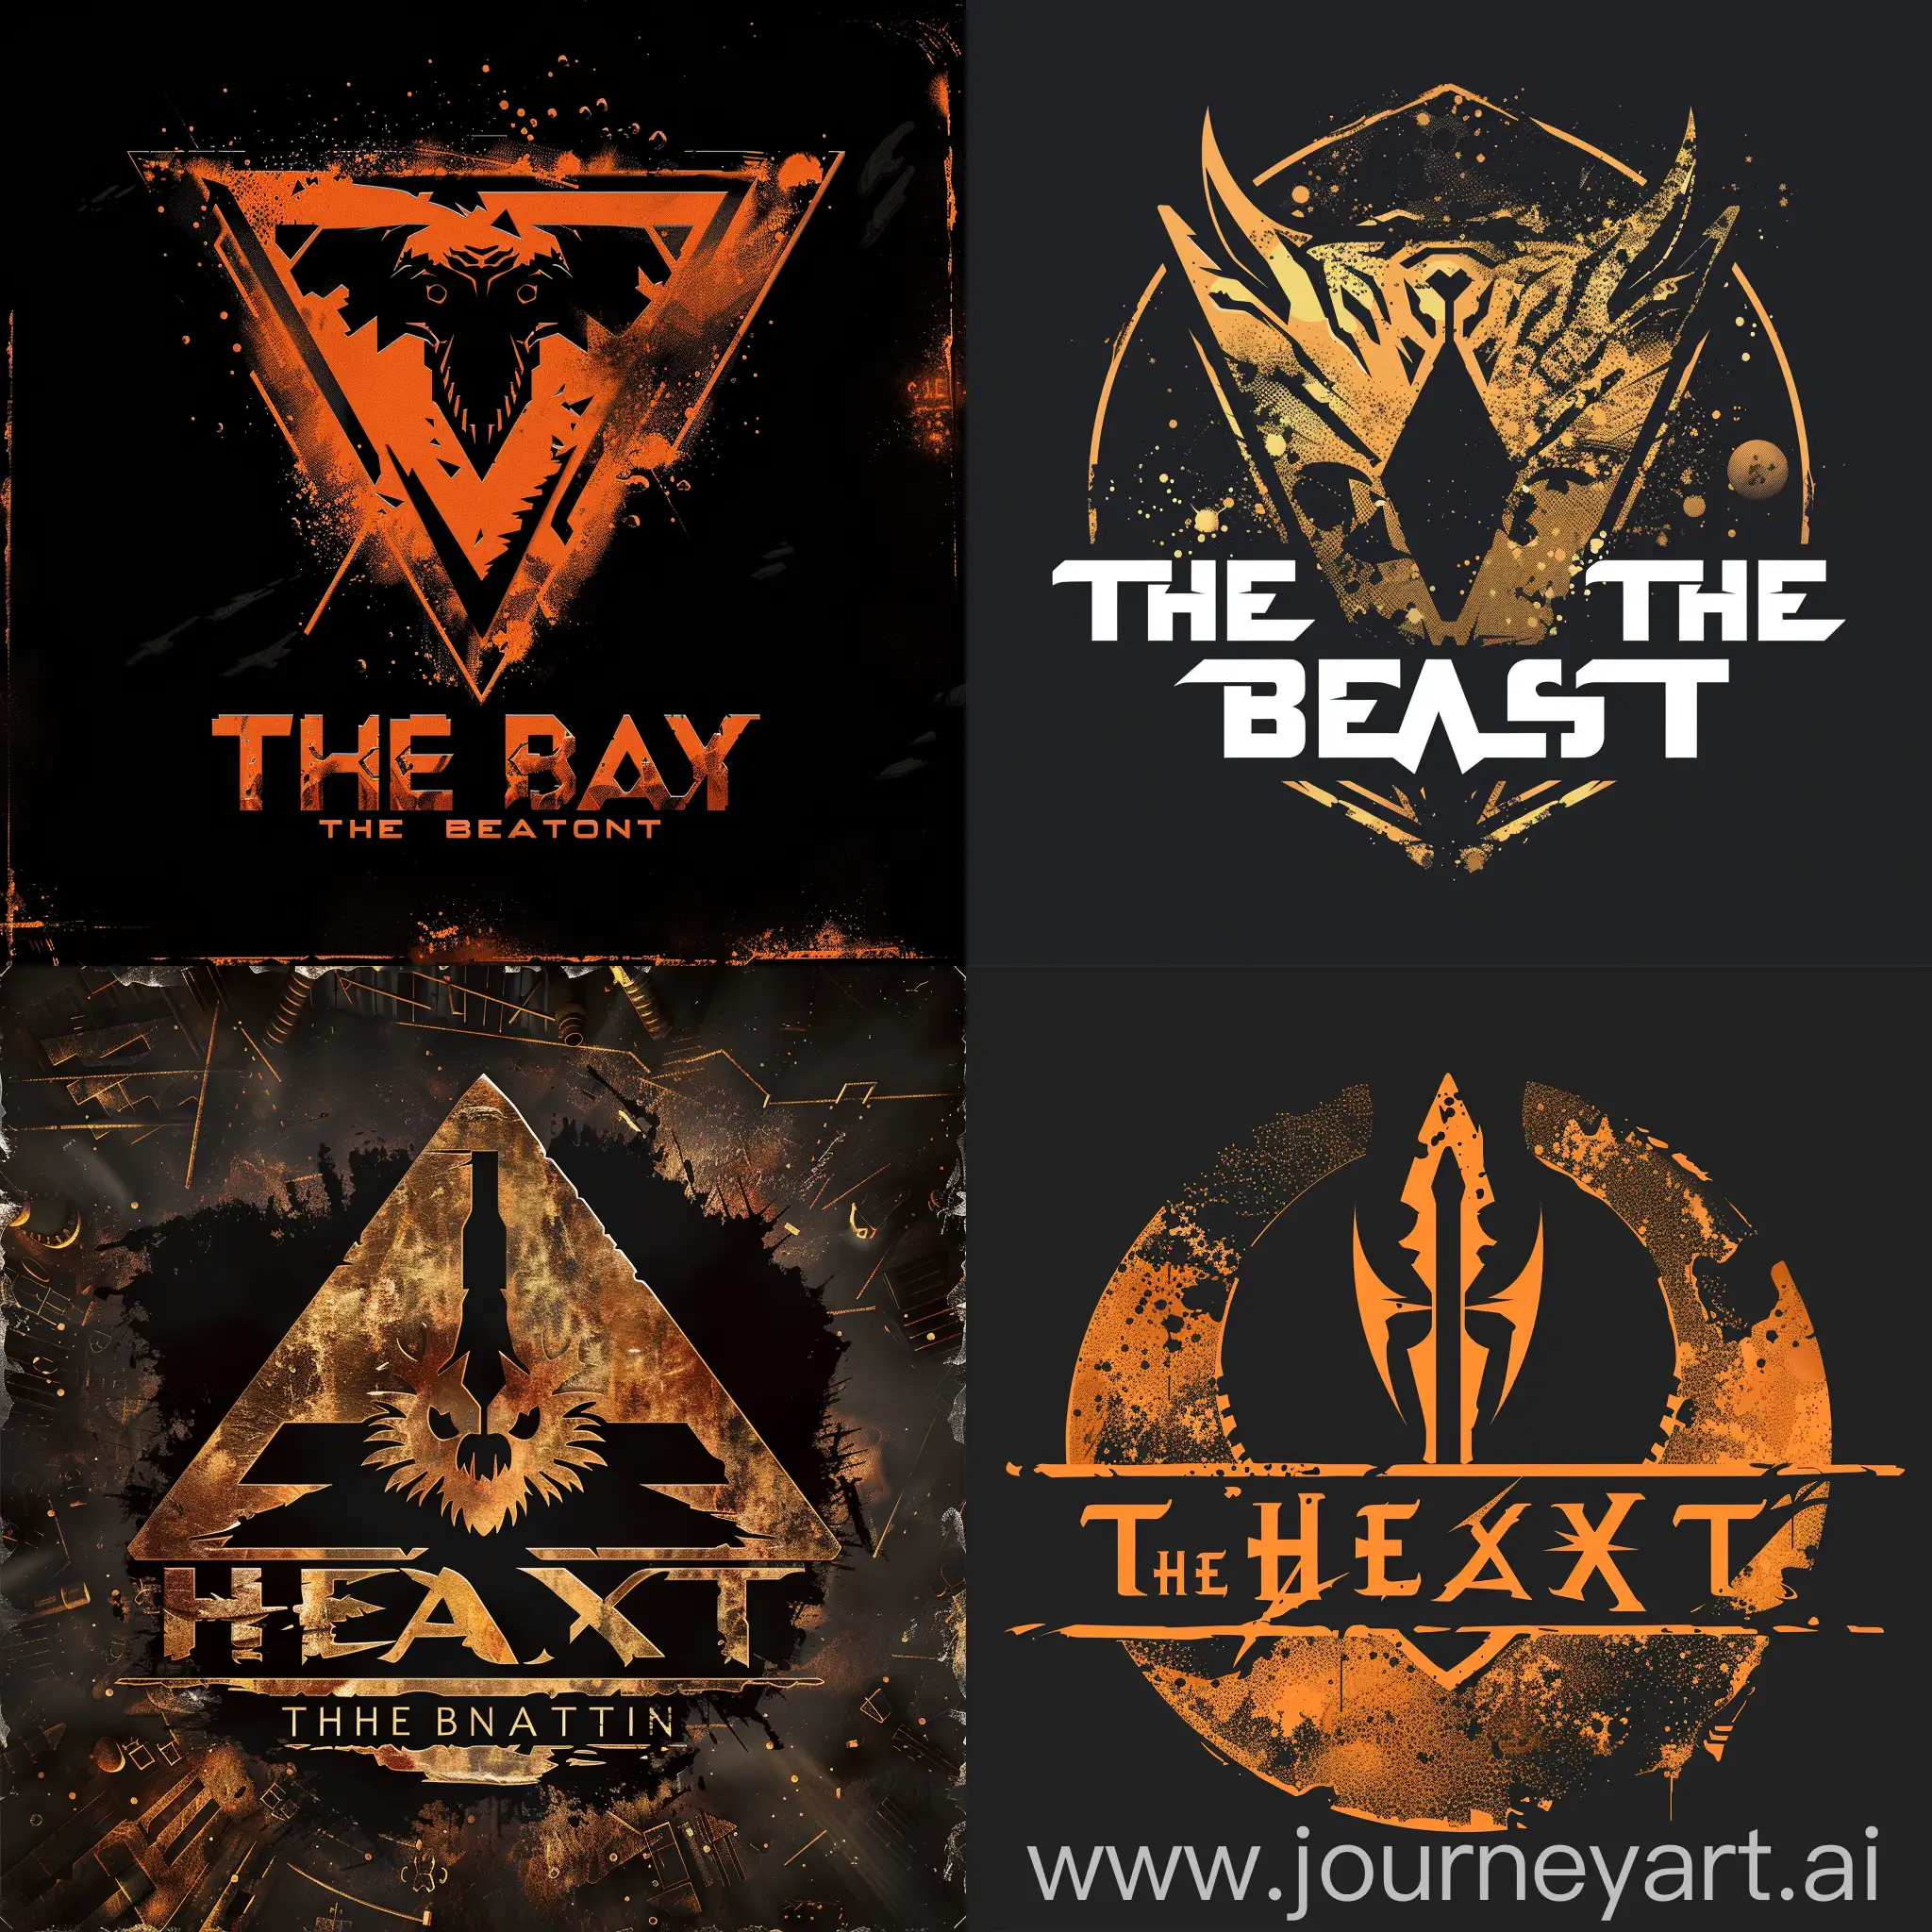 Futuristic-Mars-Base-Building-Alliance-Logo-The-Beast